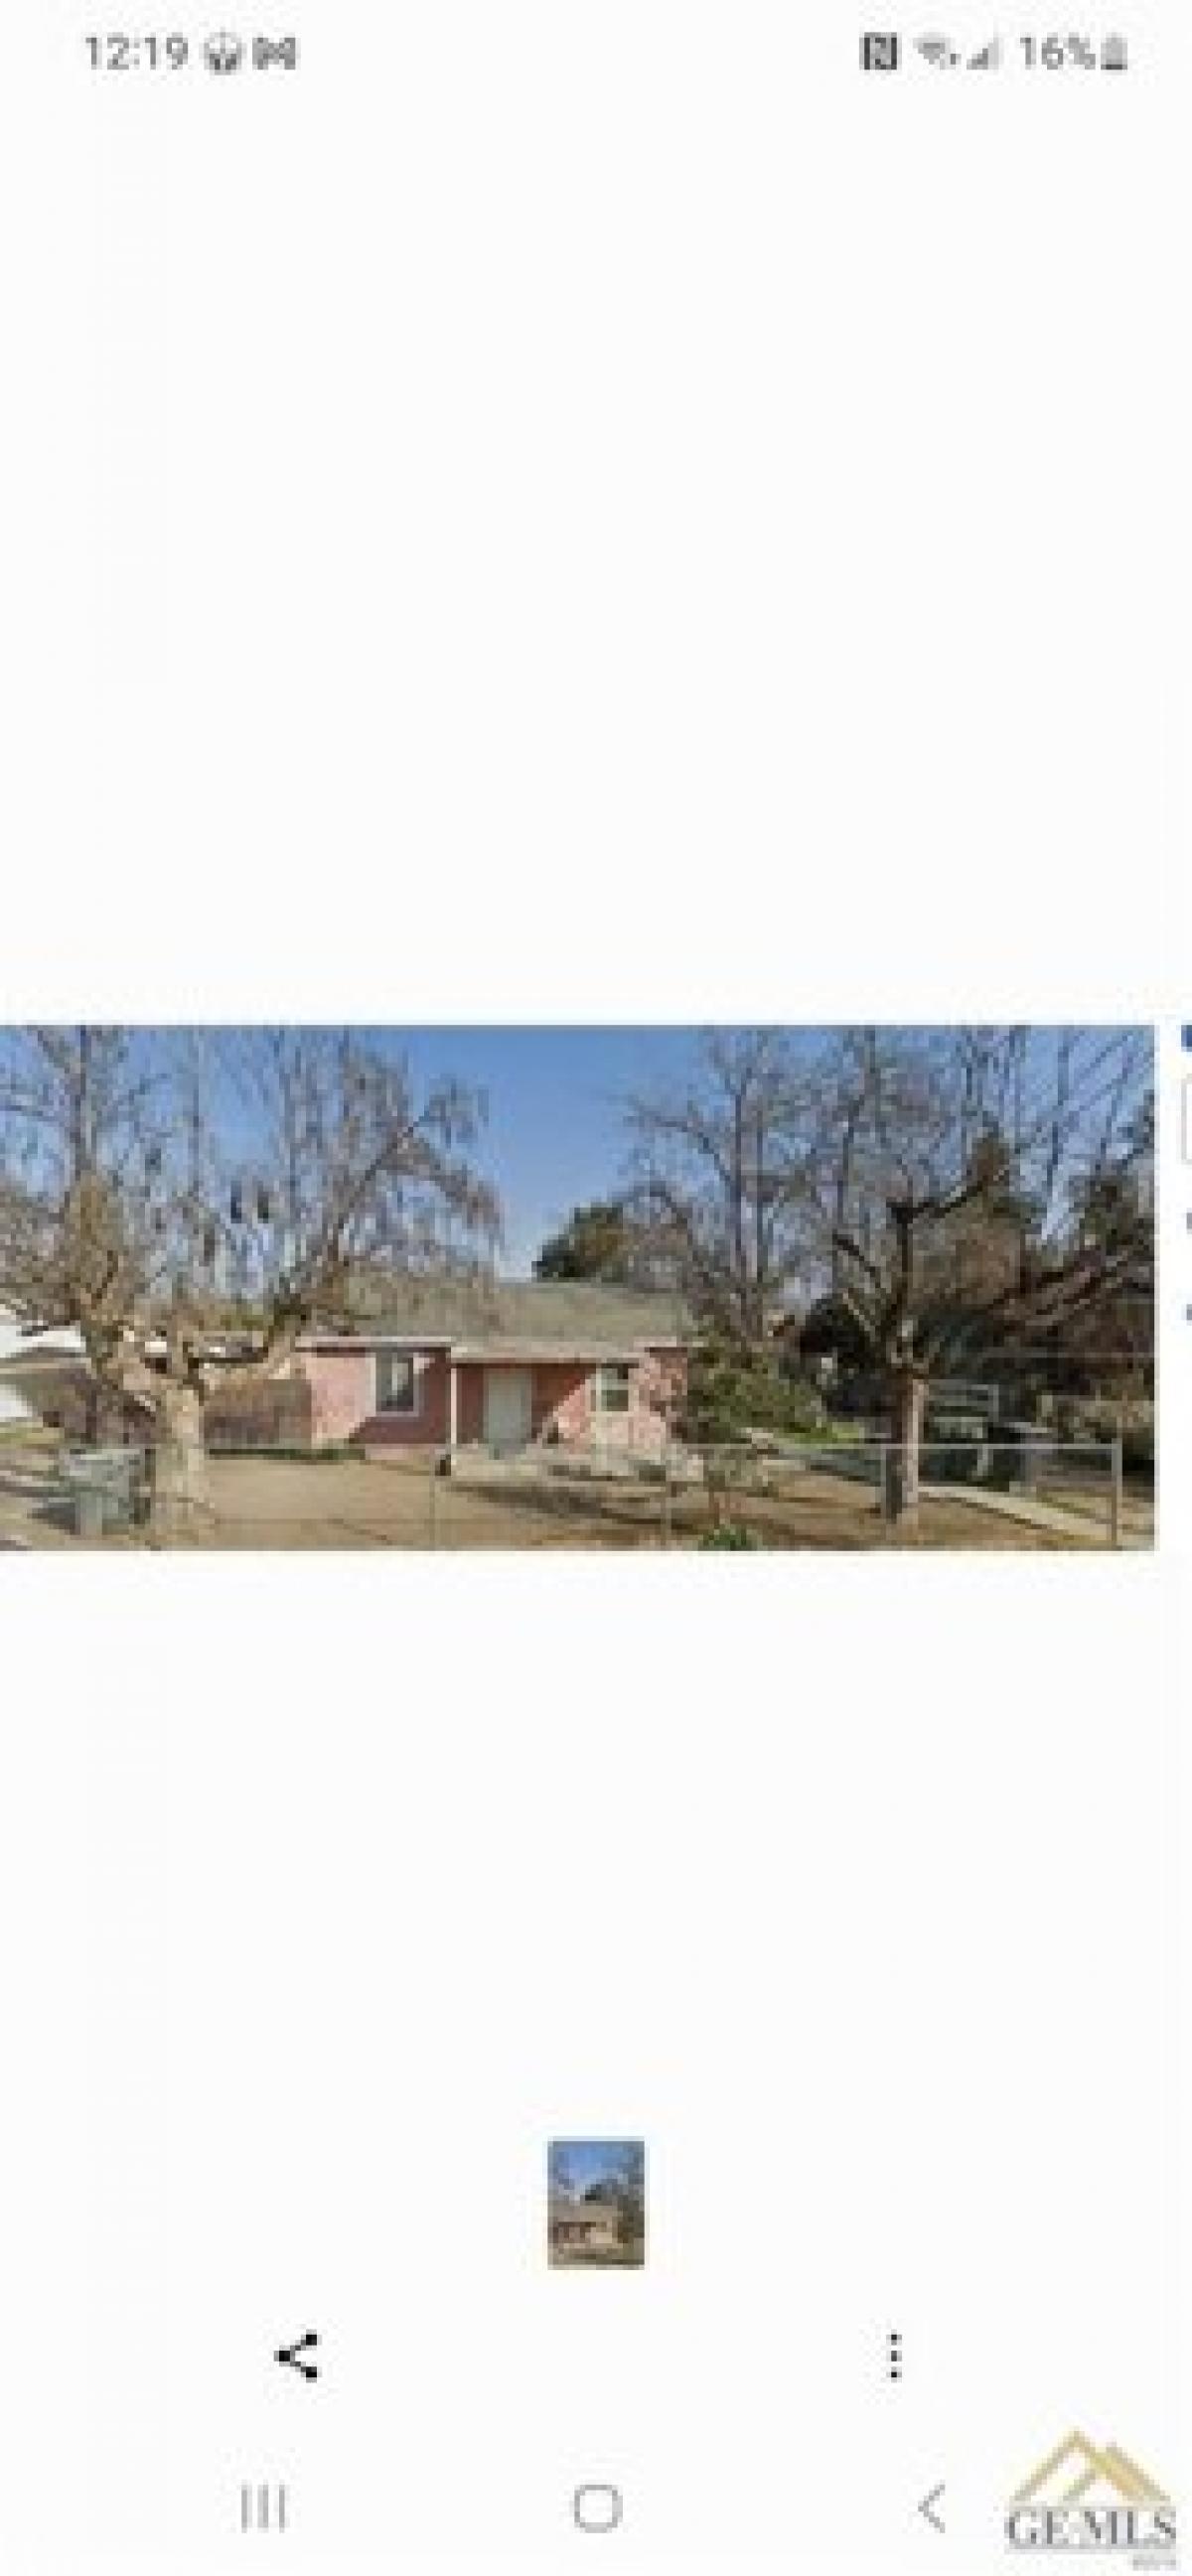 Picture of Home For Sale in Delano, California, United States